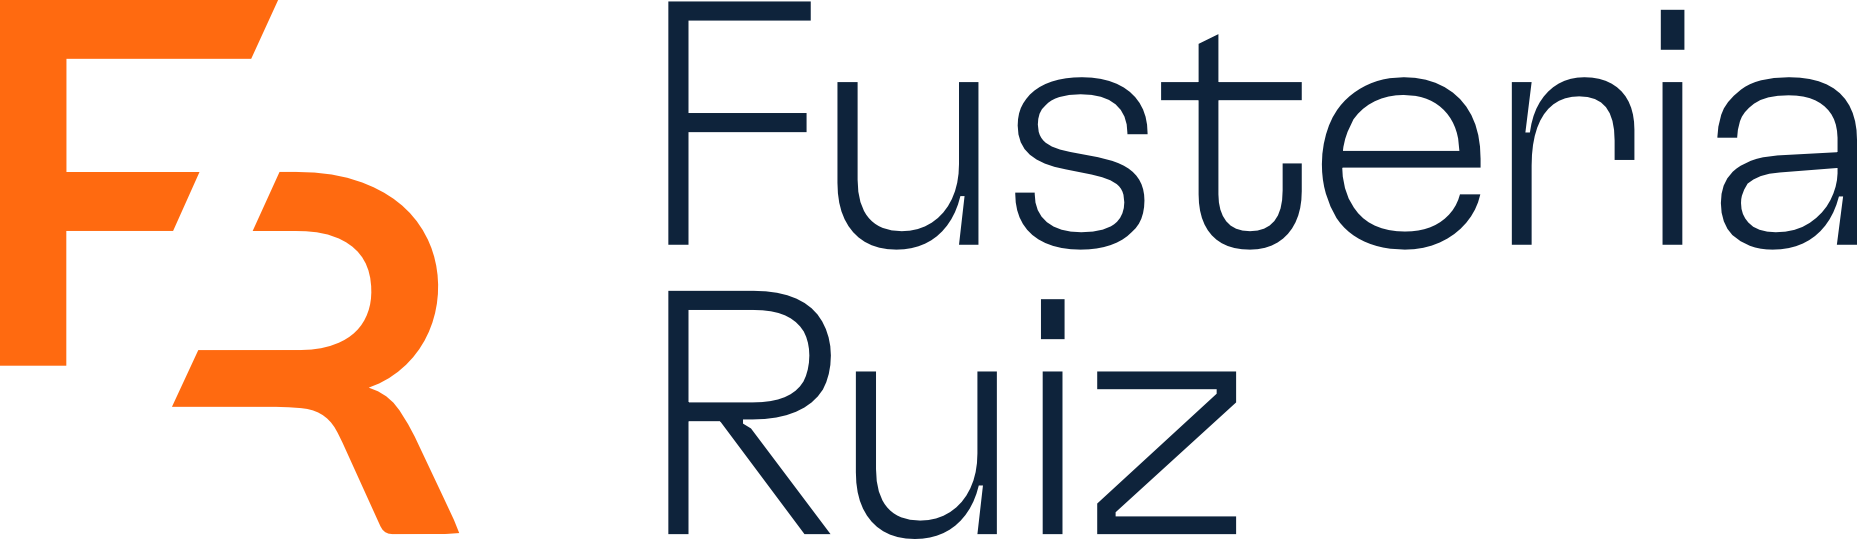 Fusteria Ruiz